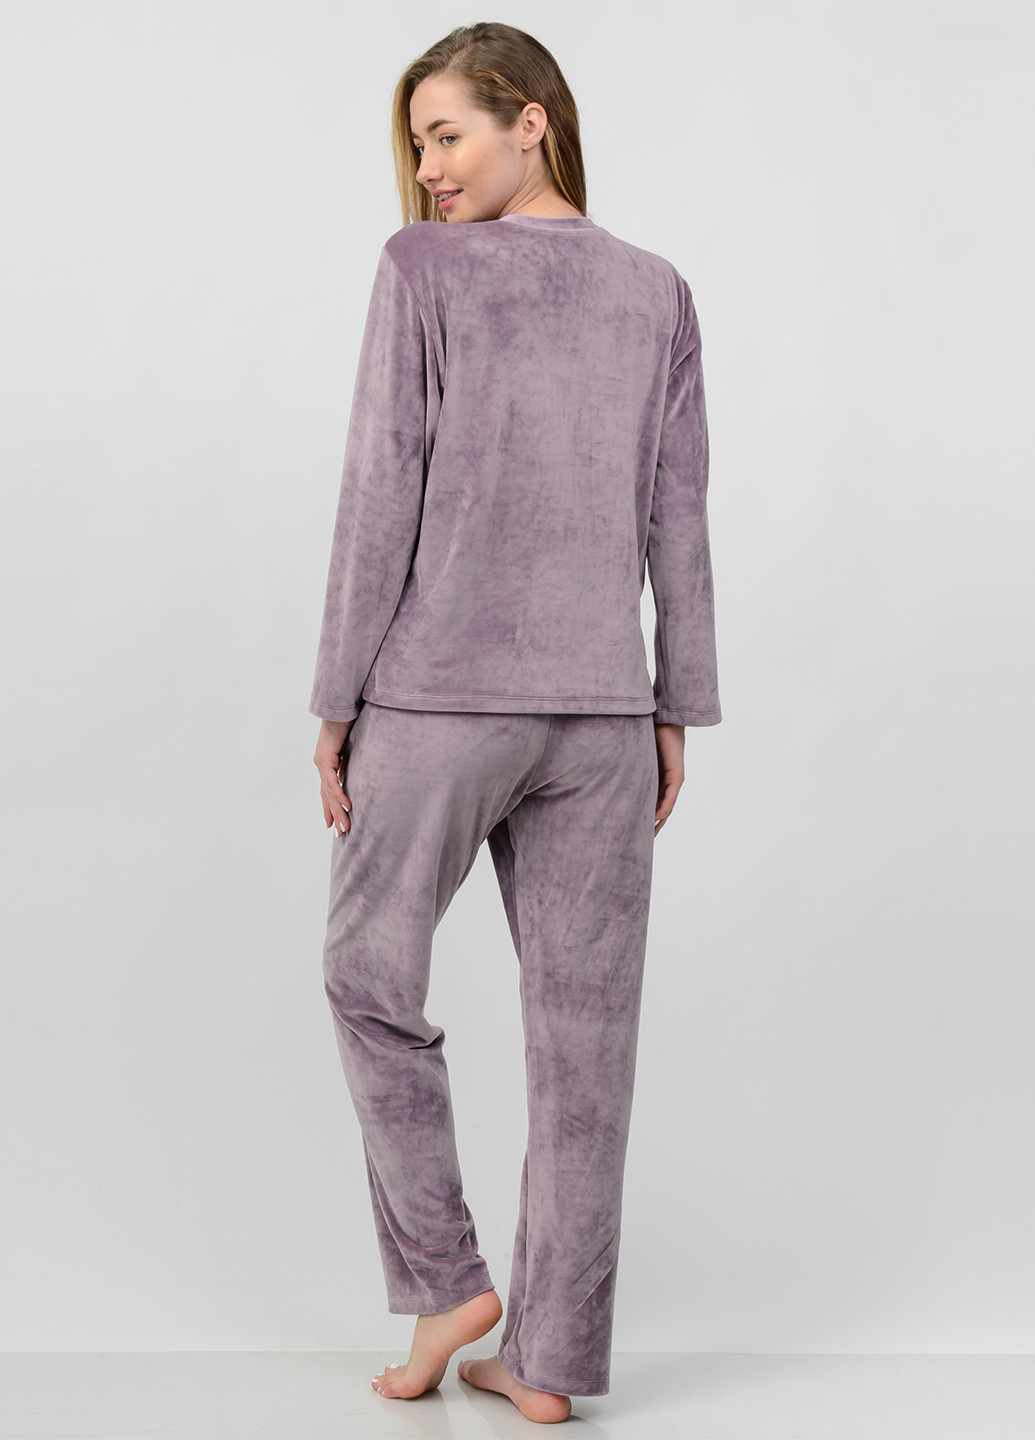 Сиреневая всесезон пижама (лонгслив, брюки) лонгслив + брюки SWEET NIGHT